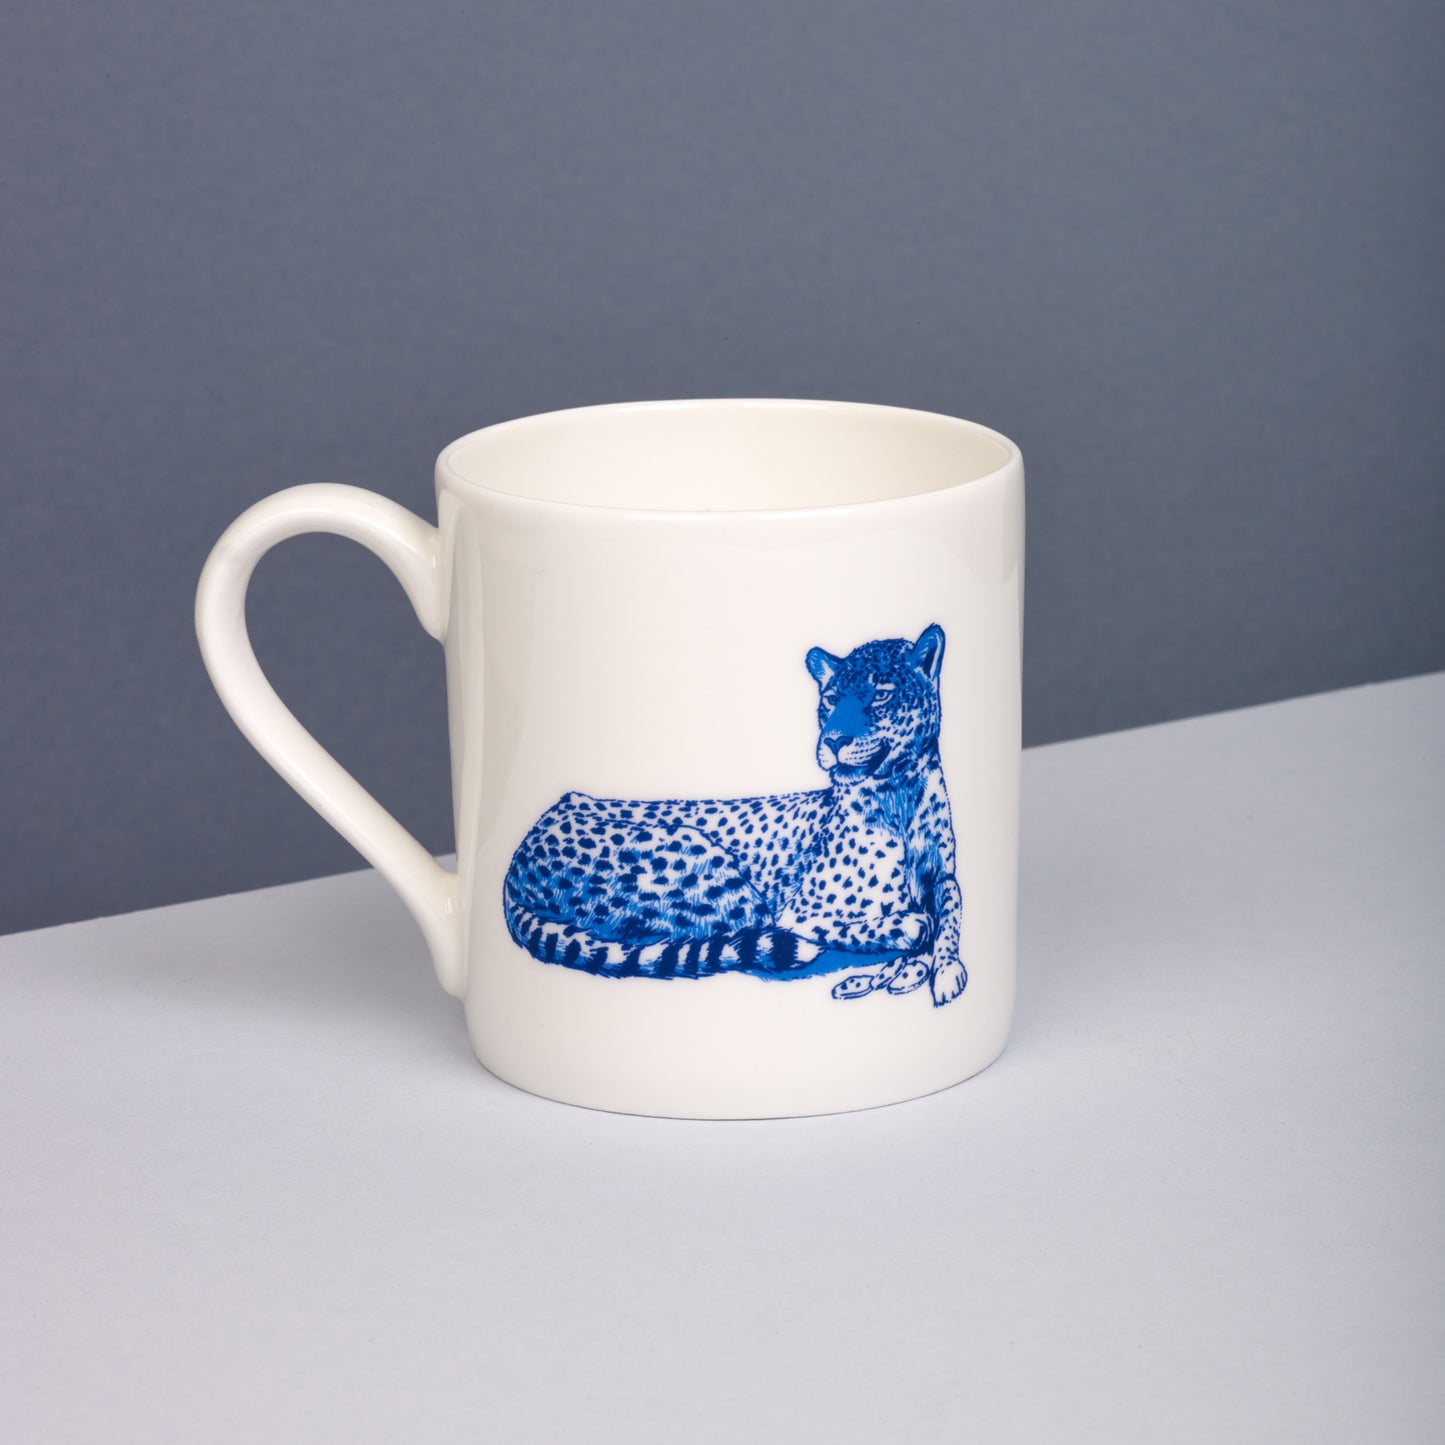 Leopard Willow pattern mug